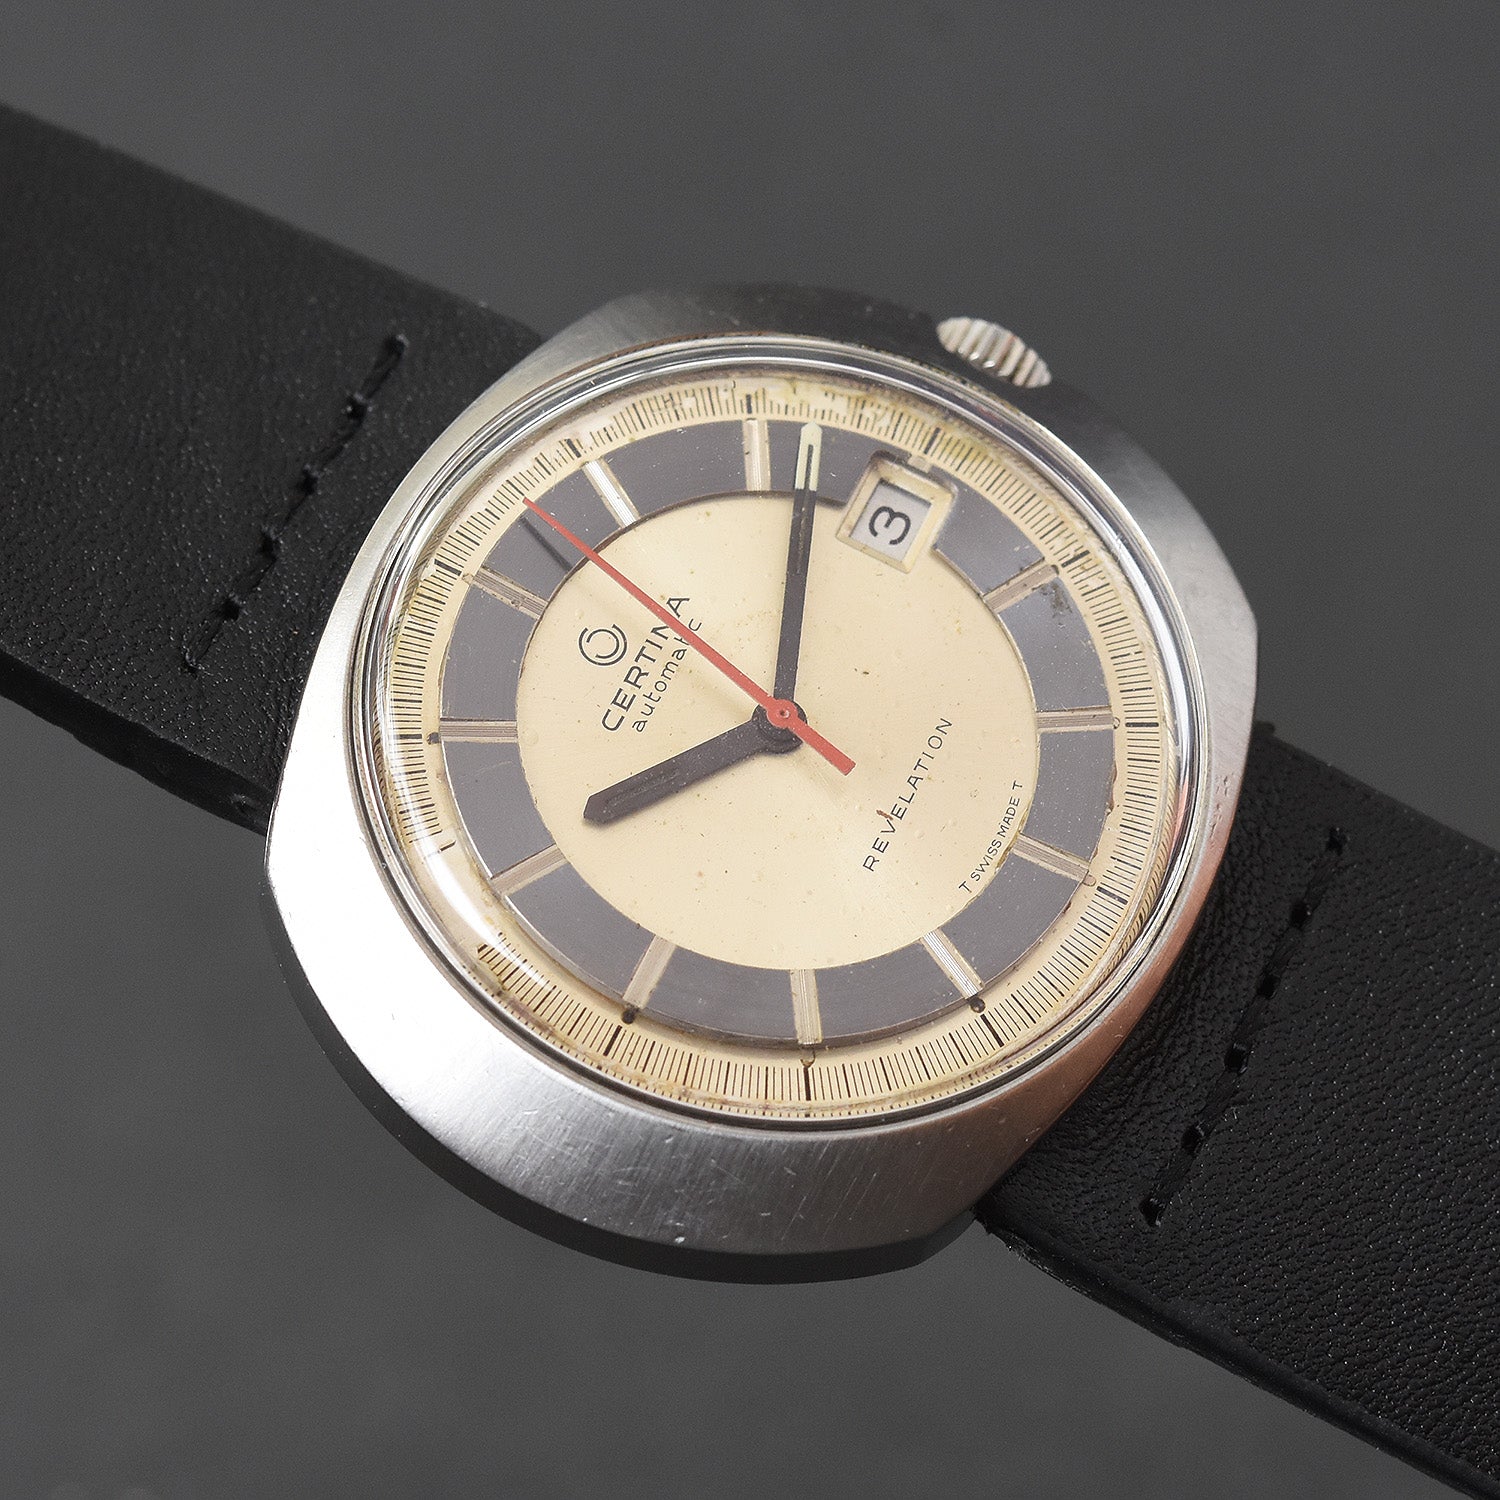 60s CERTINA 'Revelation' Automatic Date  Vintage Watch